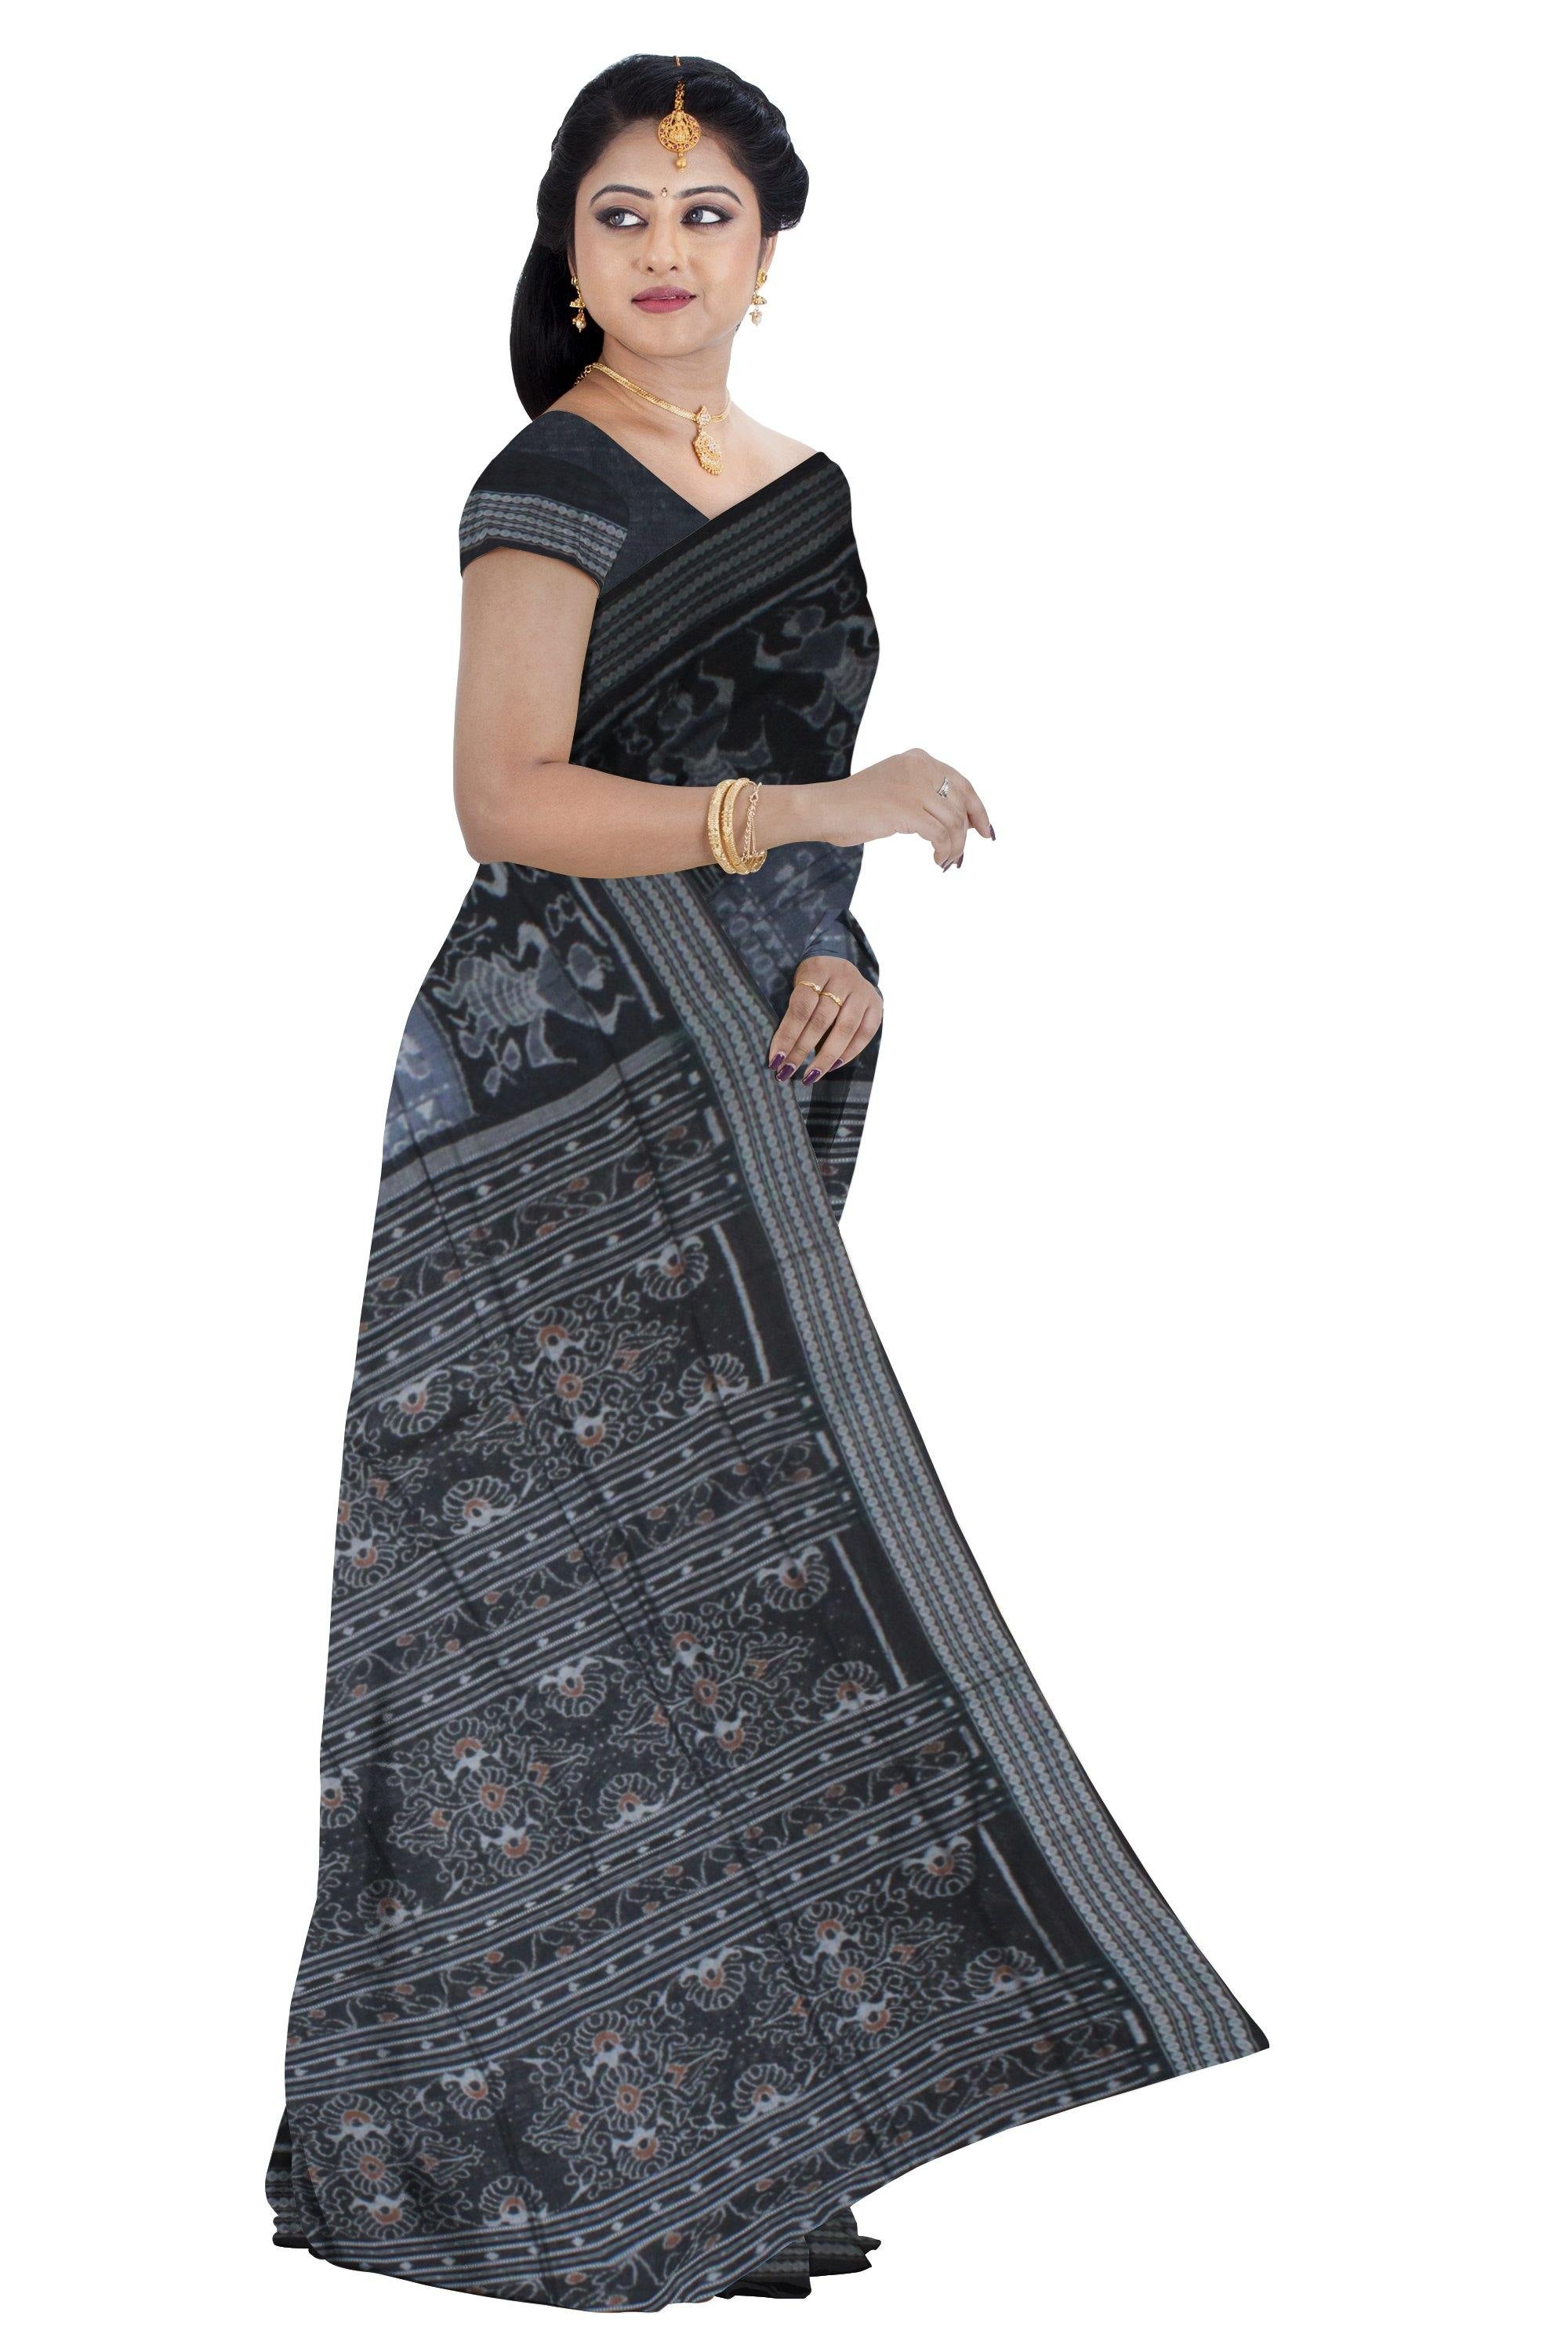 Tribal IKAT pattern Bluish Grey Sambalpuri cotton saree - Koshali Arts & Crafts Enterprise